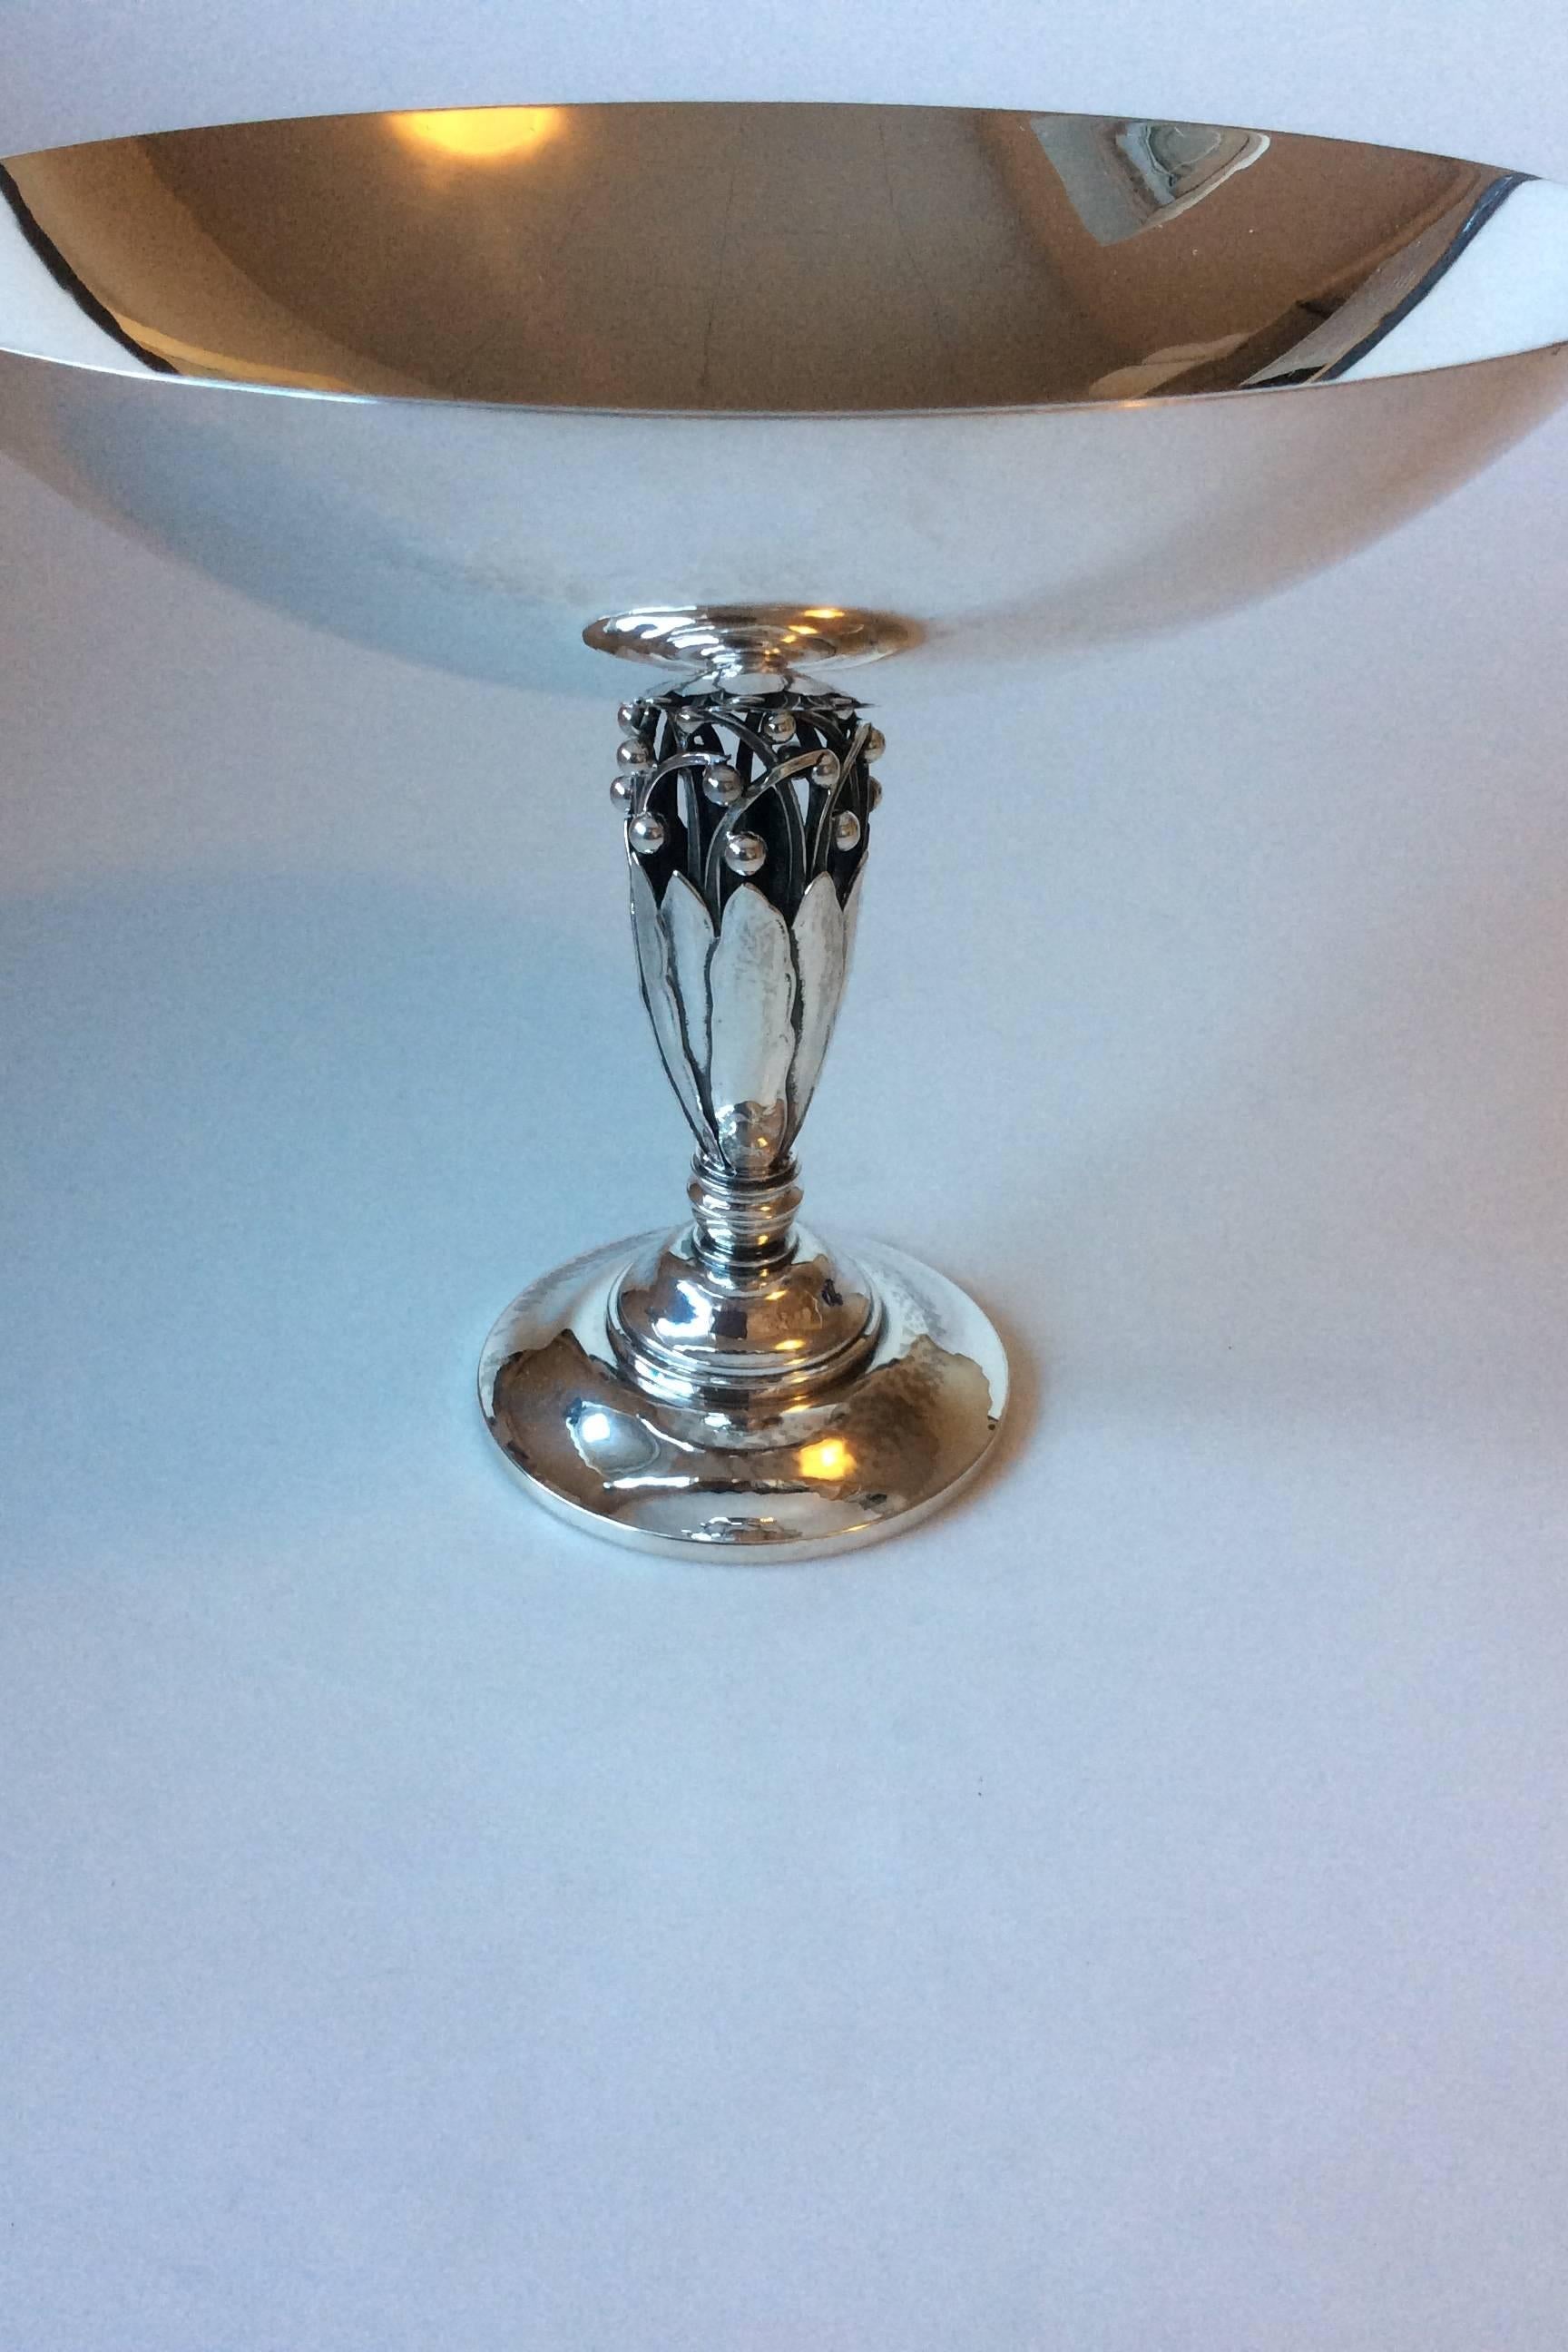 Georg Jensen sterling silver bowl #574B. Measures 17 cm x 20 cm.